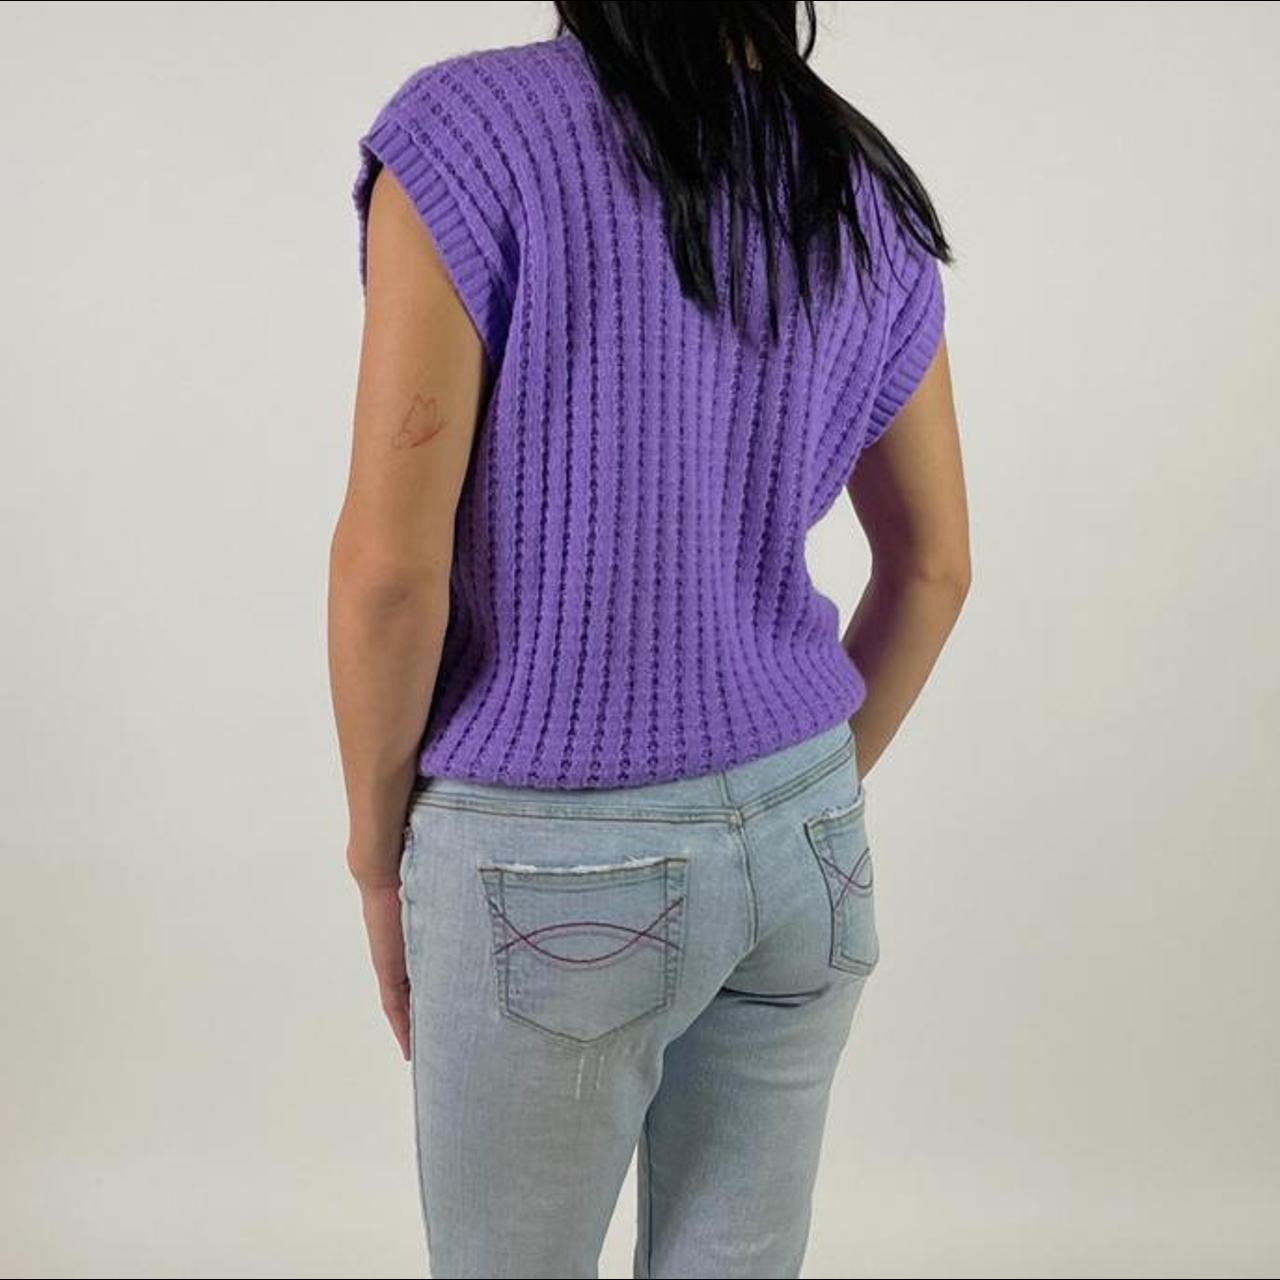 Product Image 3 - Vintage Purple Sweater Vest
Sleeveless sweater